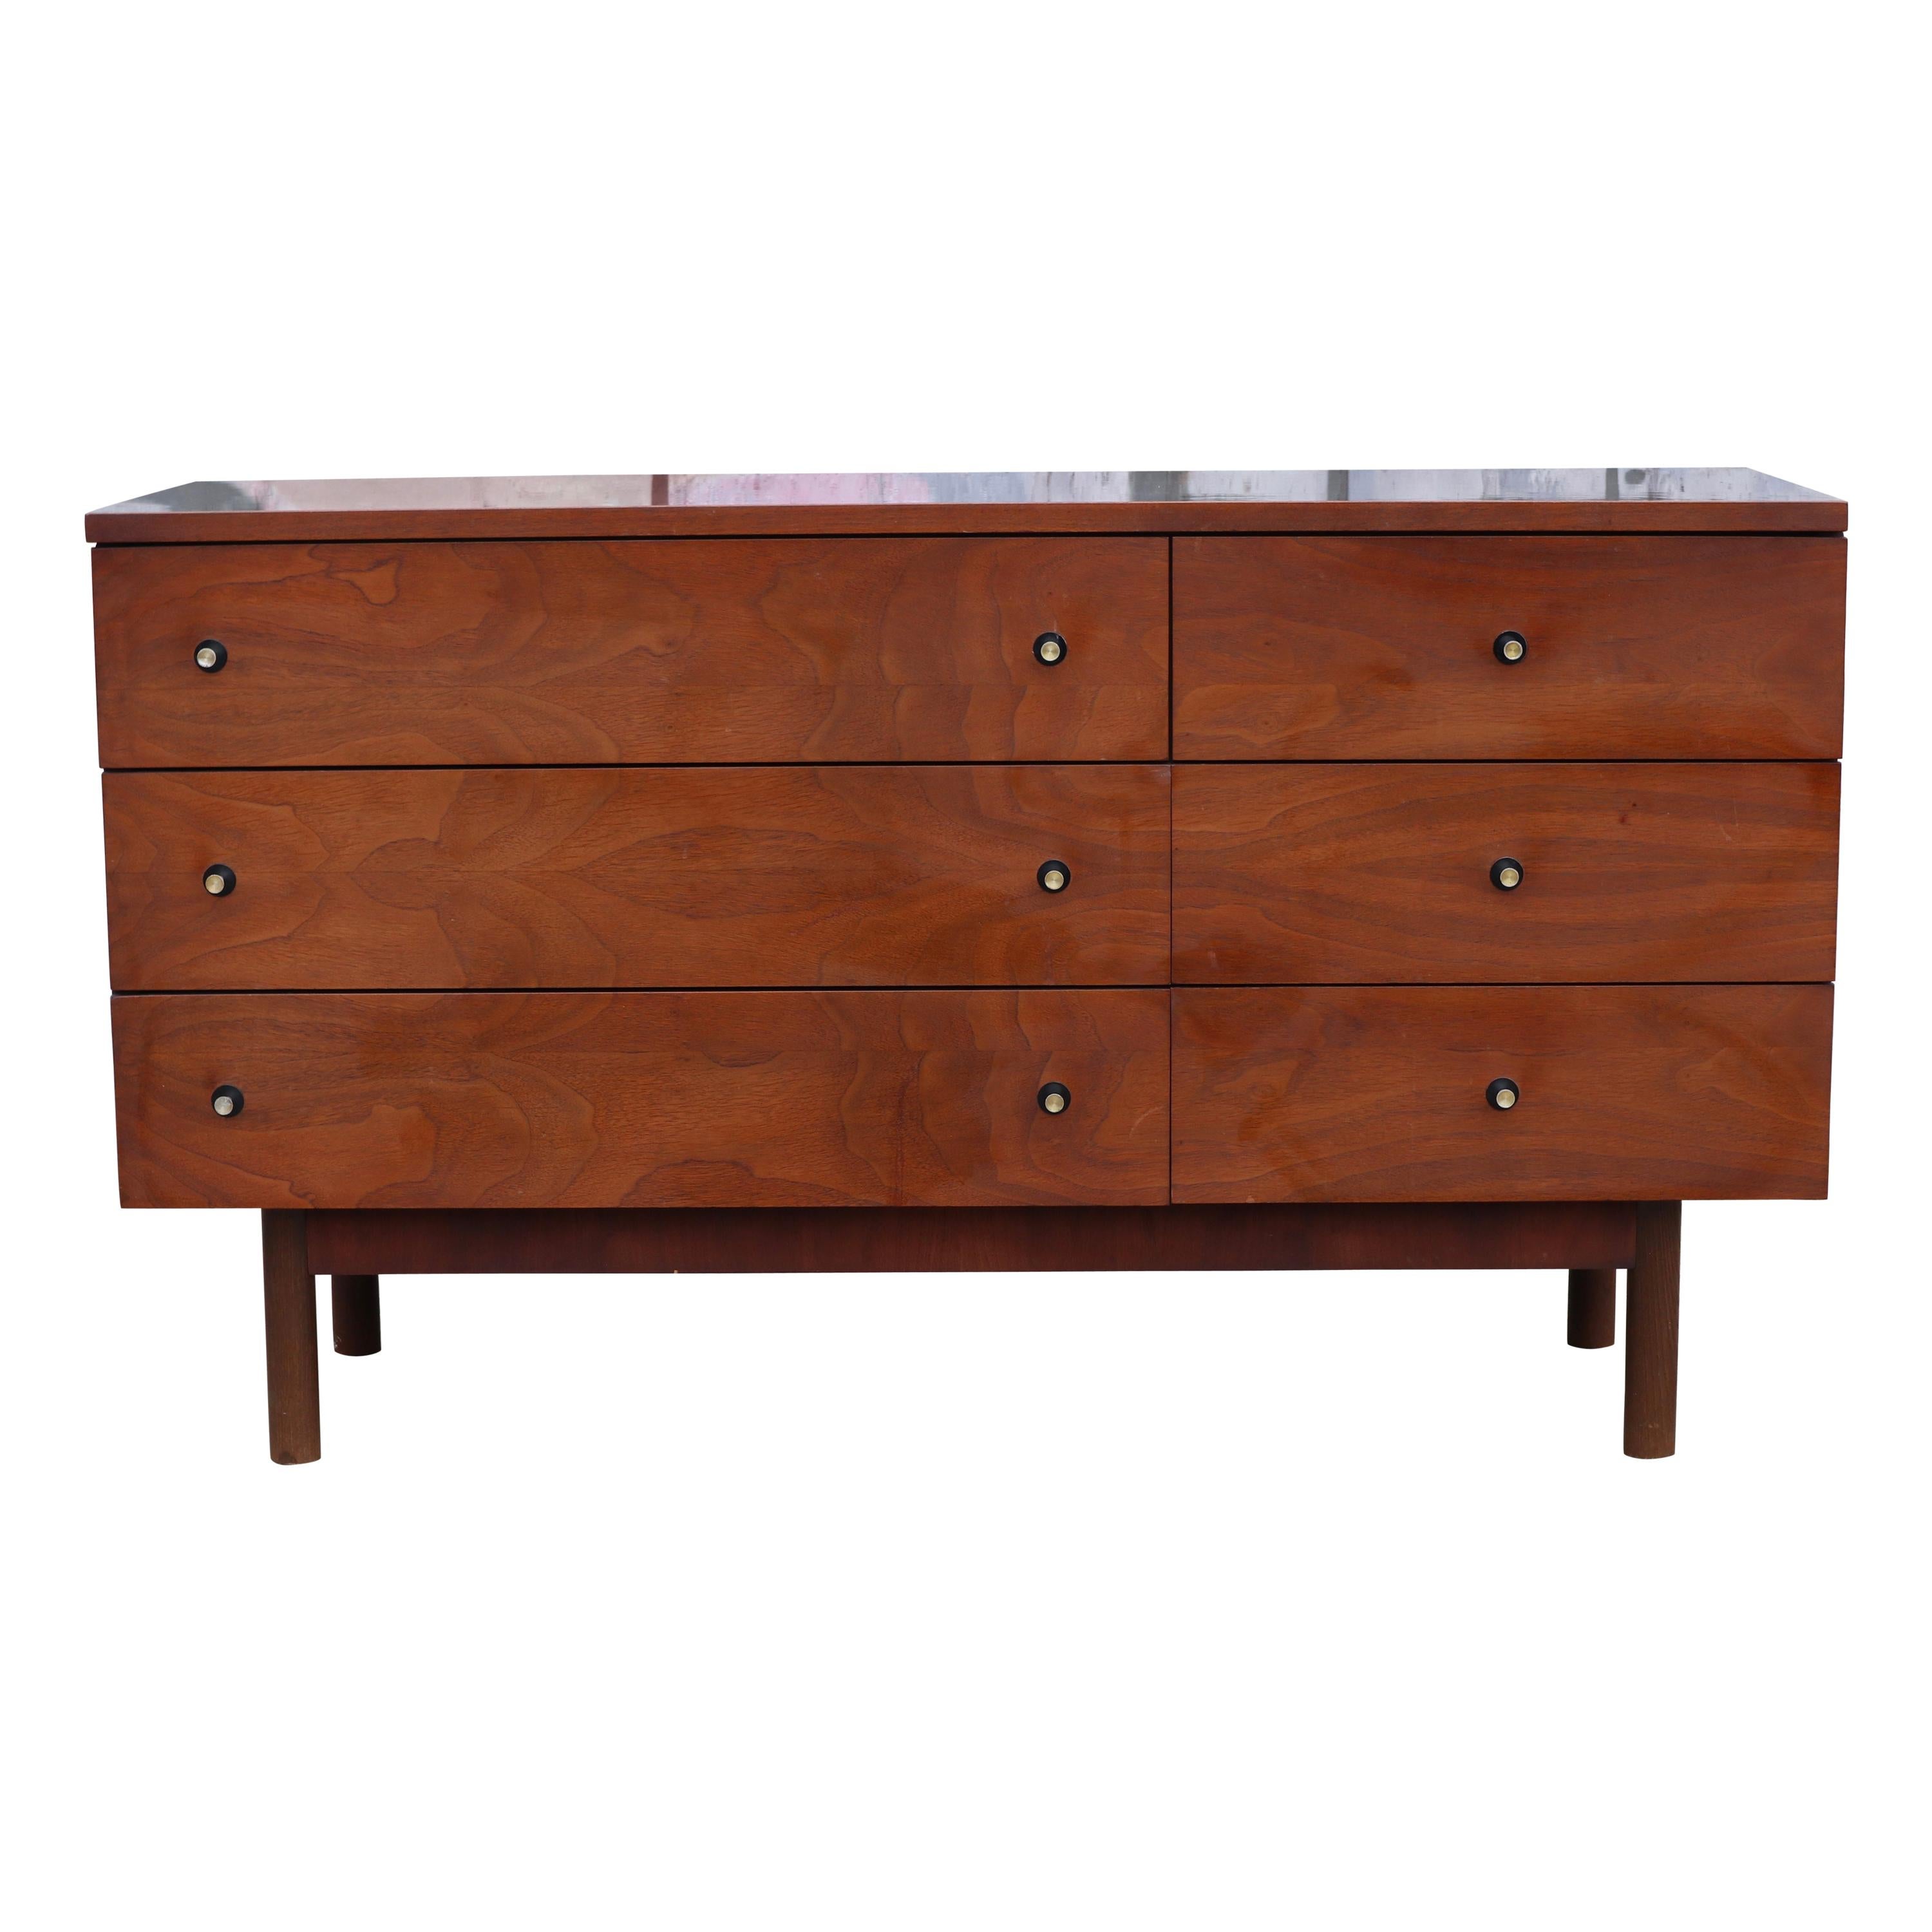 Stanley Furniture Company Walnut Dresser Sideboard Credenza